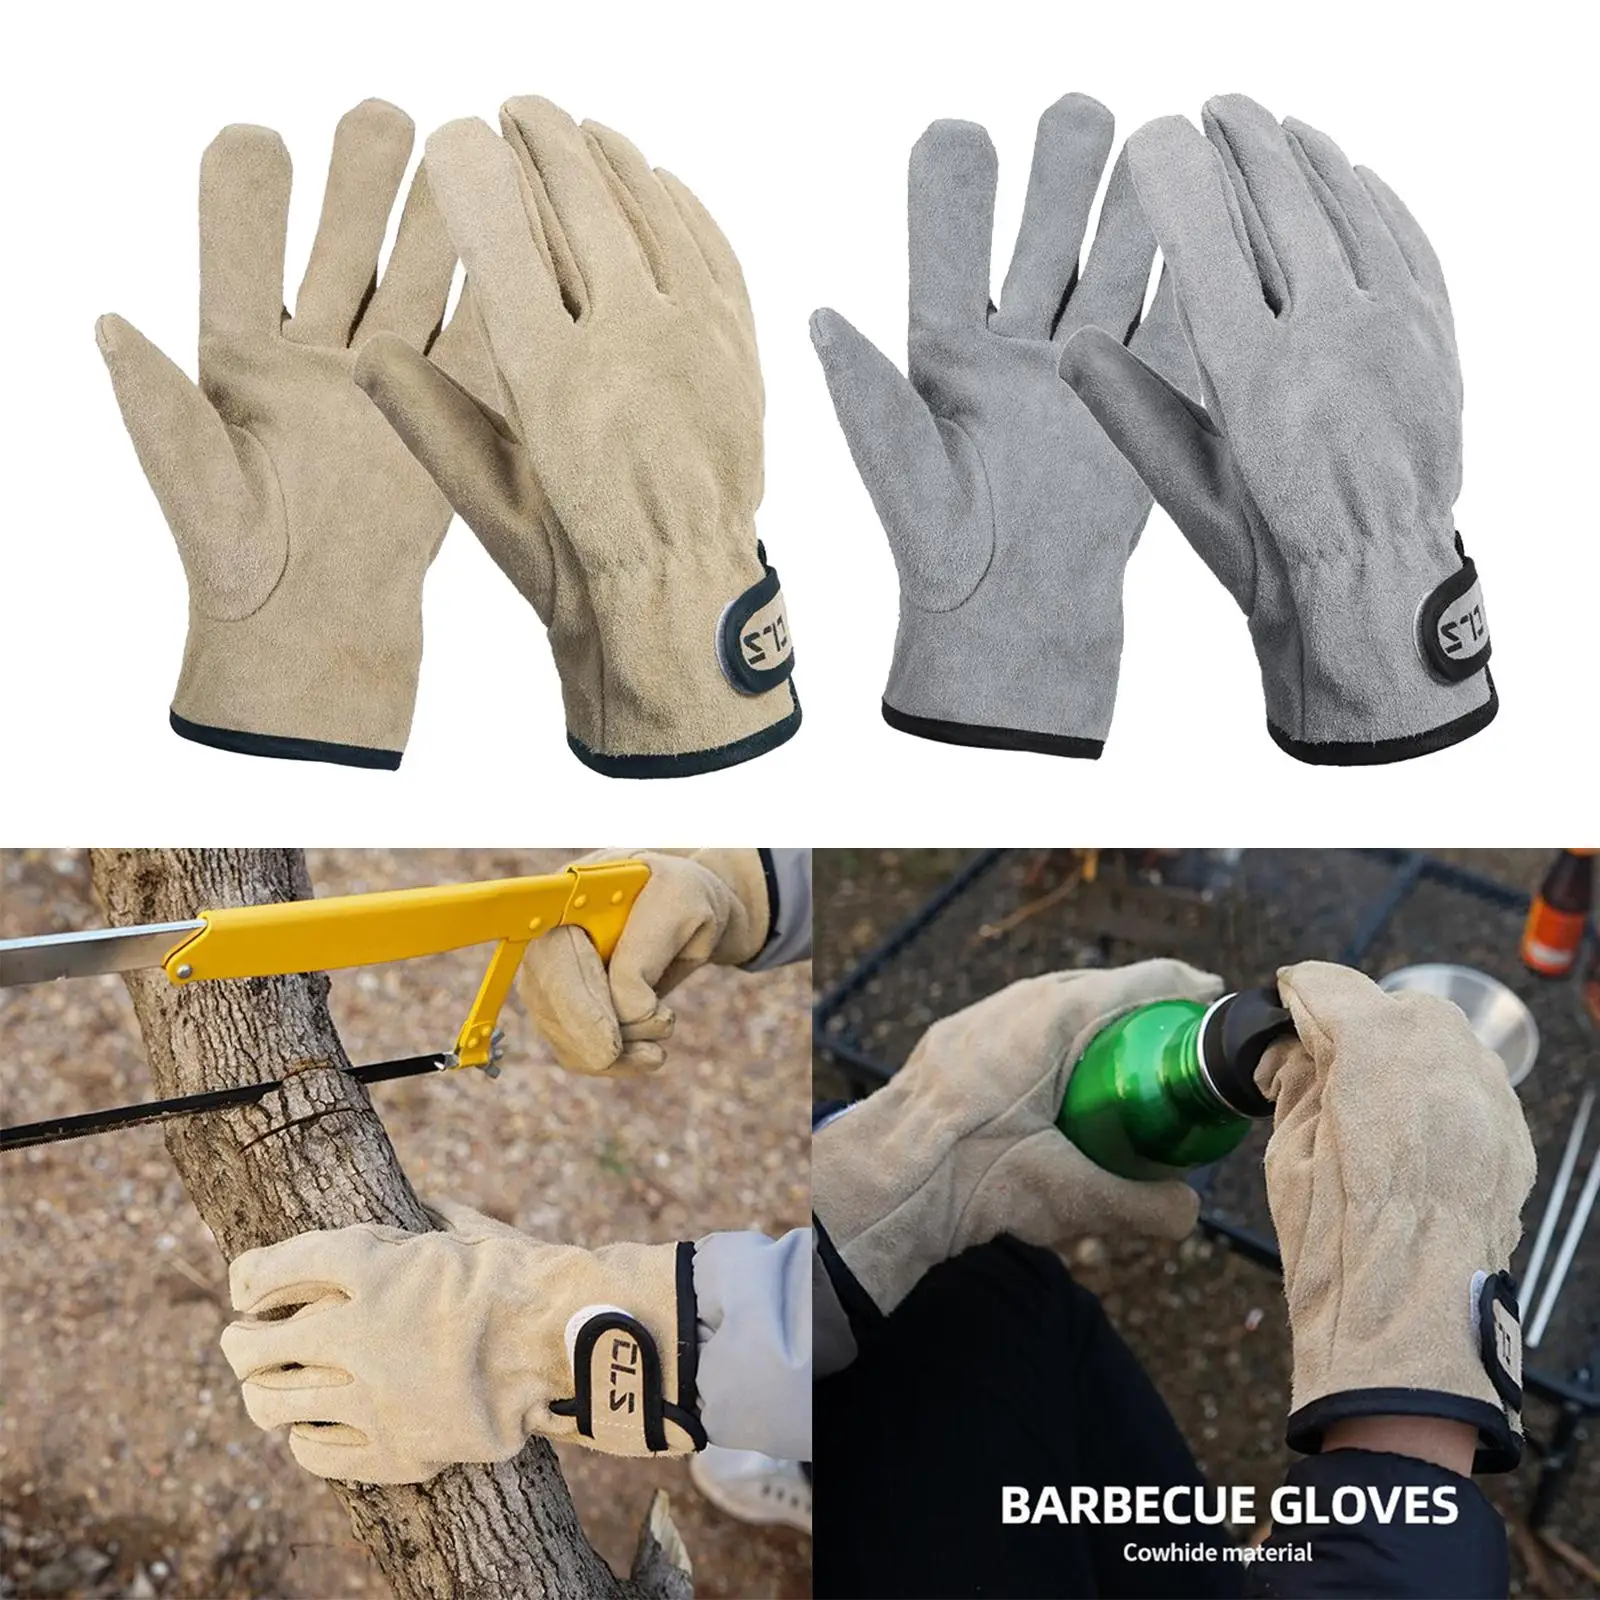 Leather Work Gloves Wear-Resisting Heat Resistance Utility Welding Gloves